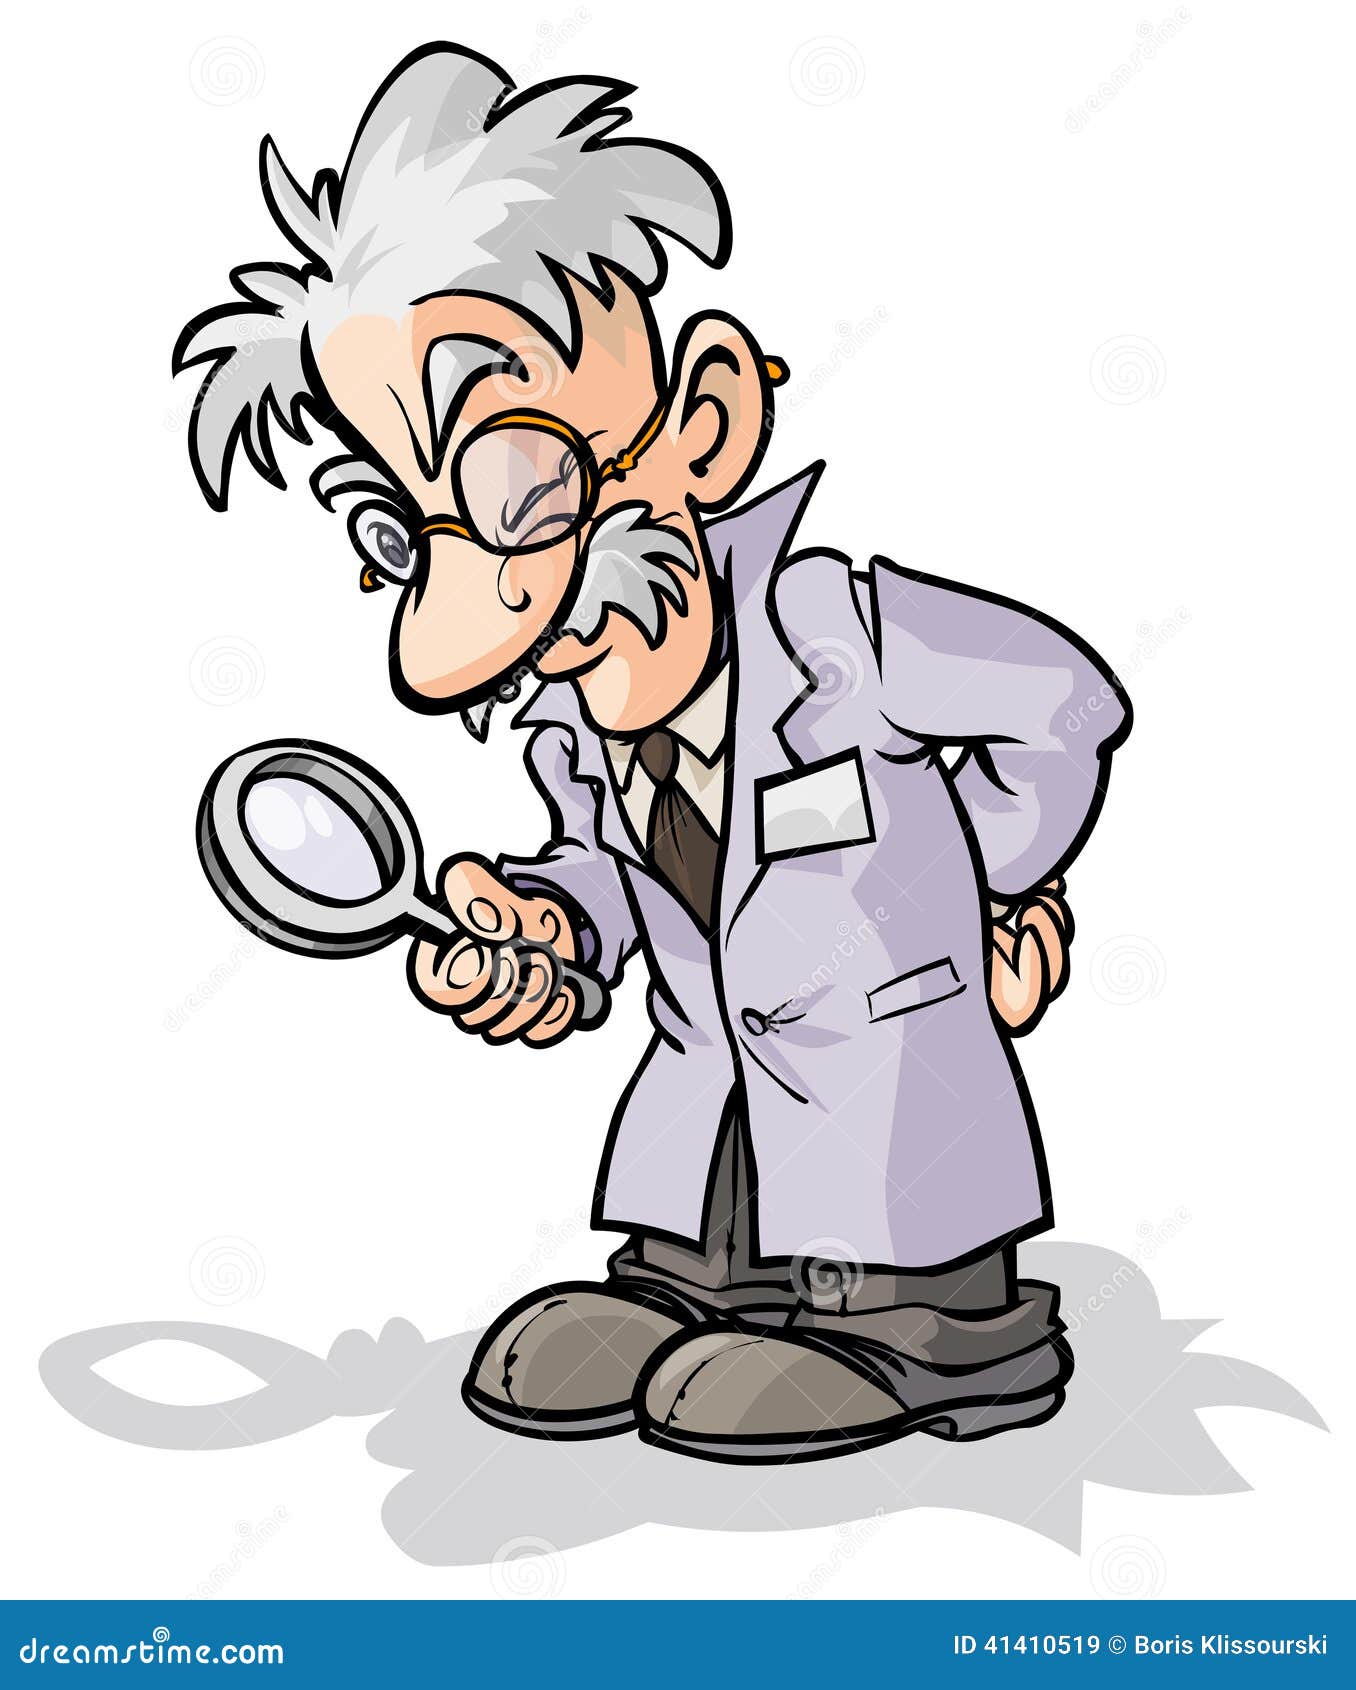 clipart scientist cartoon - photo #49